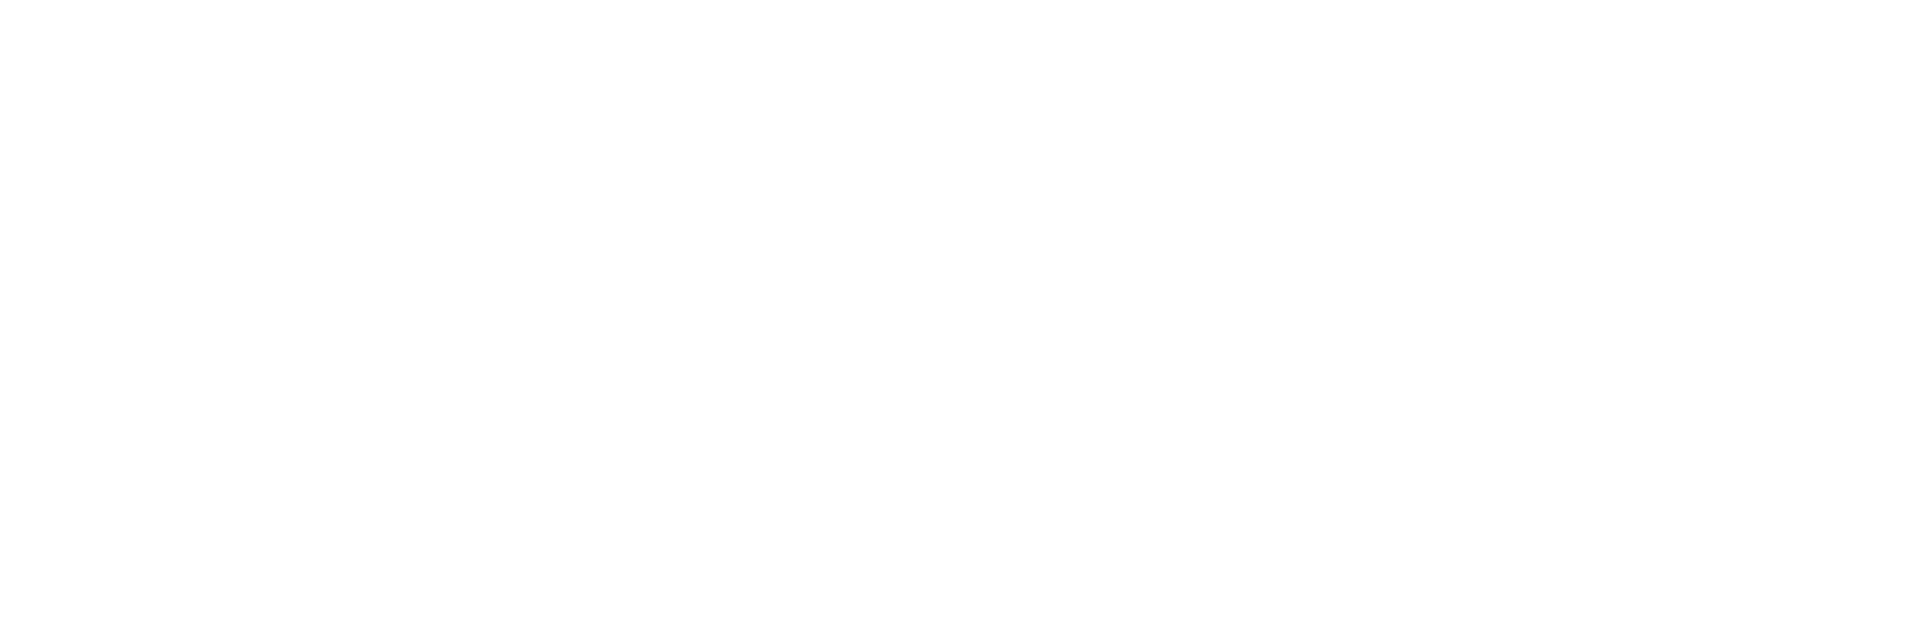 Frontline Negotiations